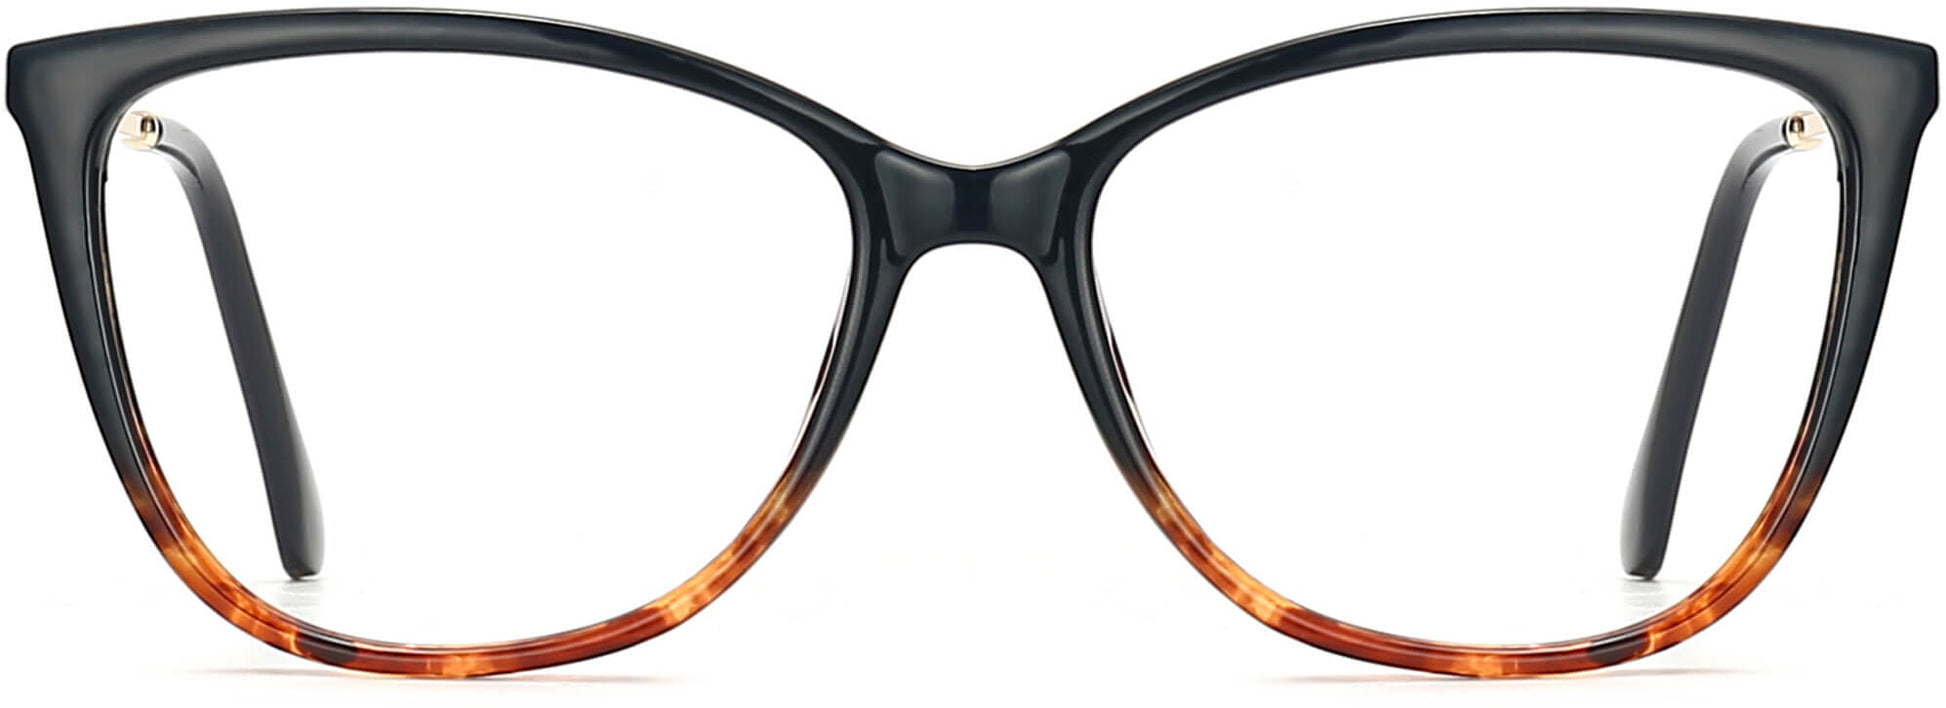 Brinley Cateye Black Tortoise Eyeglasses from ANRRI, front view